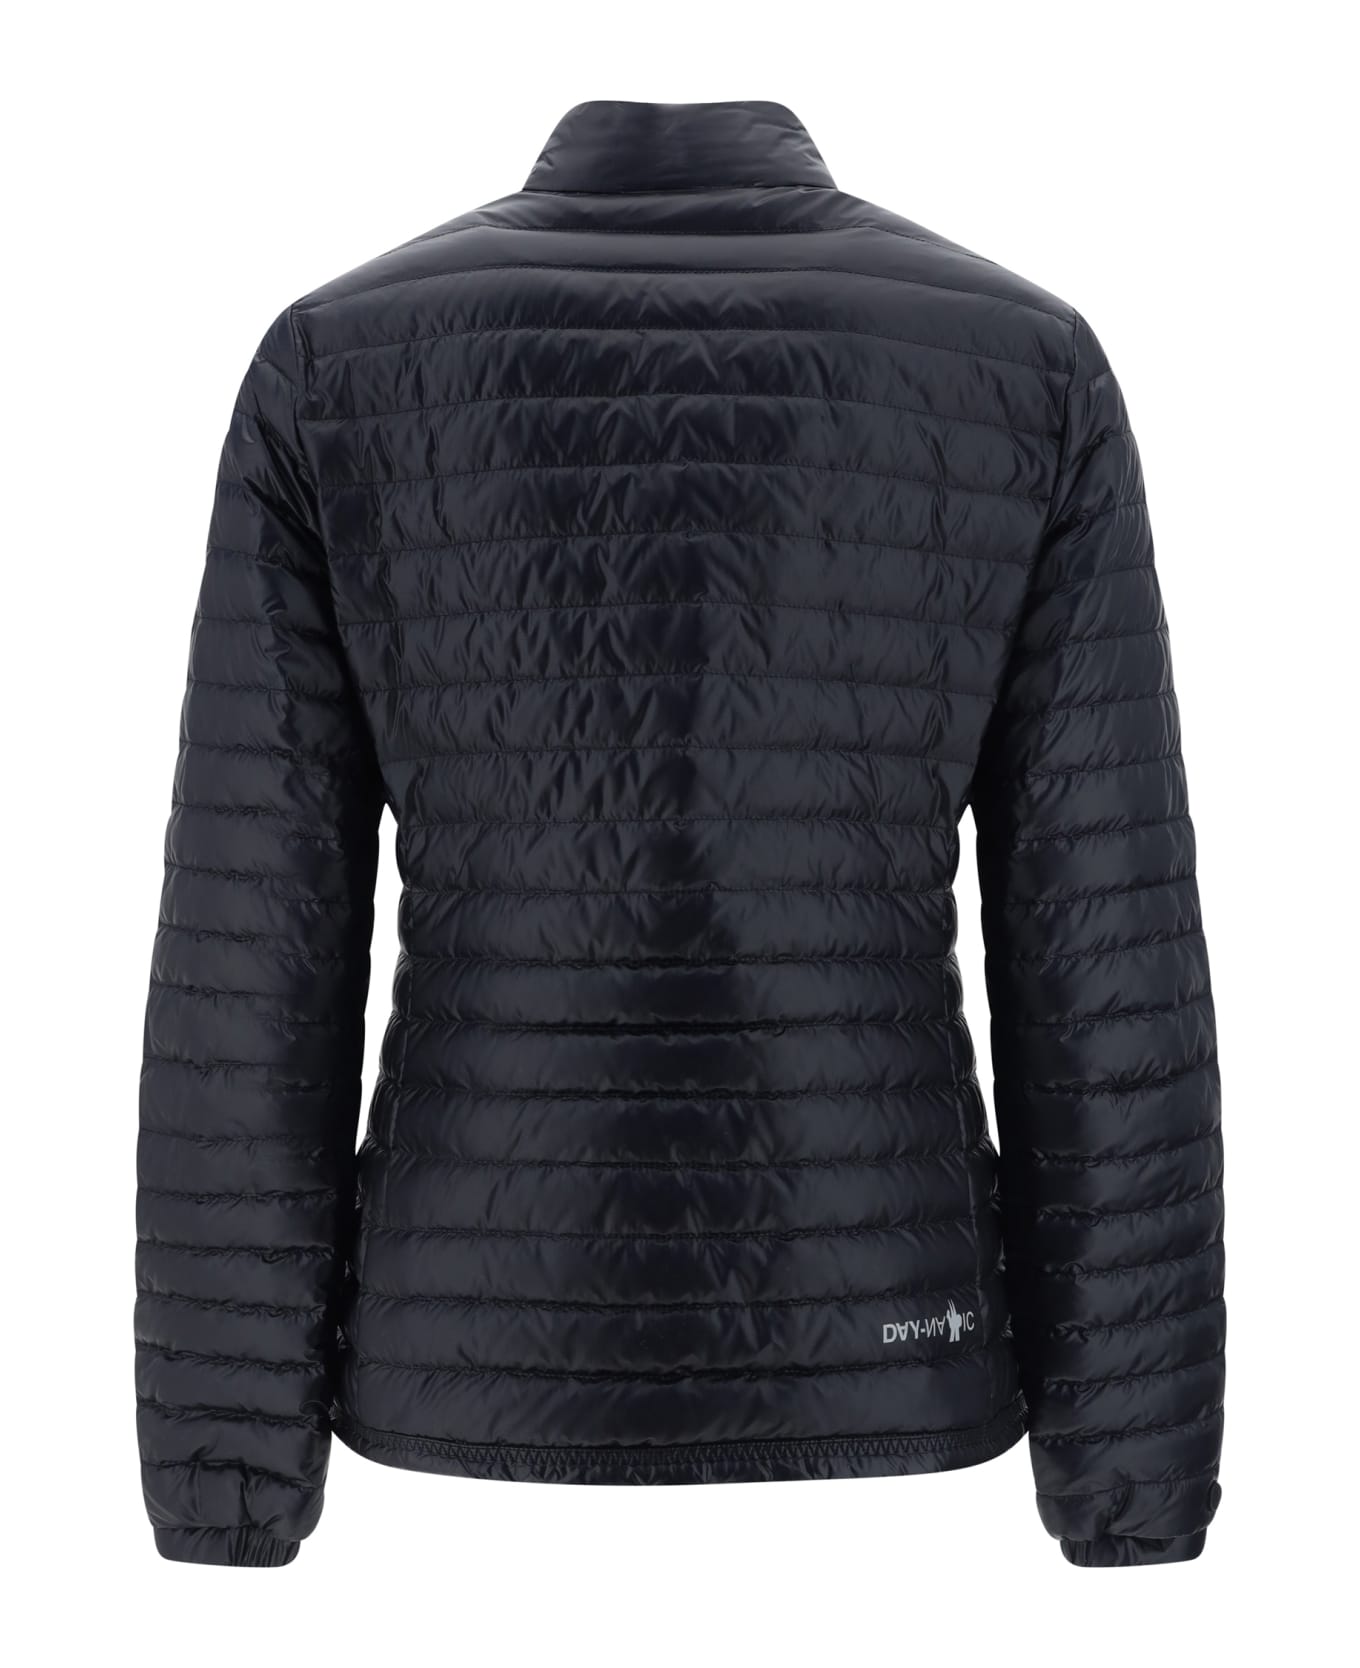 Moncler Grenoble Pontaix Jacket - BLACK